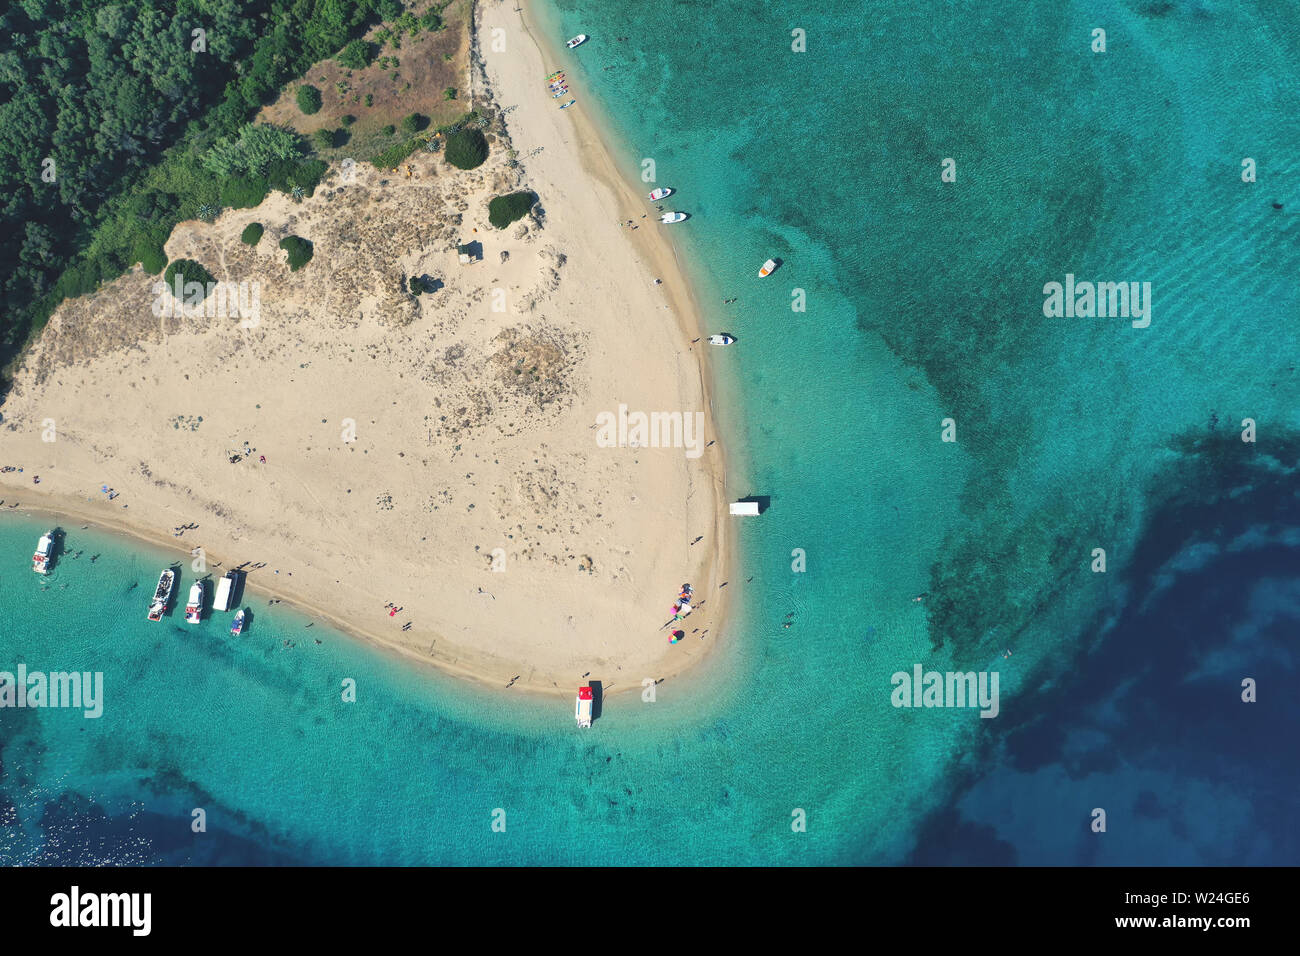 Antena drone ver iconos pequeños inhabitada isla de Marathonisi con agua clara orilla arenosa y criadero natural de mar Caretta-Caretta turt Foto de stock